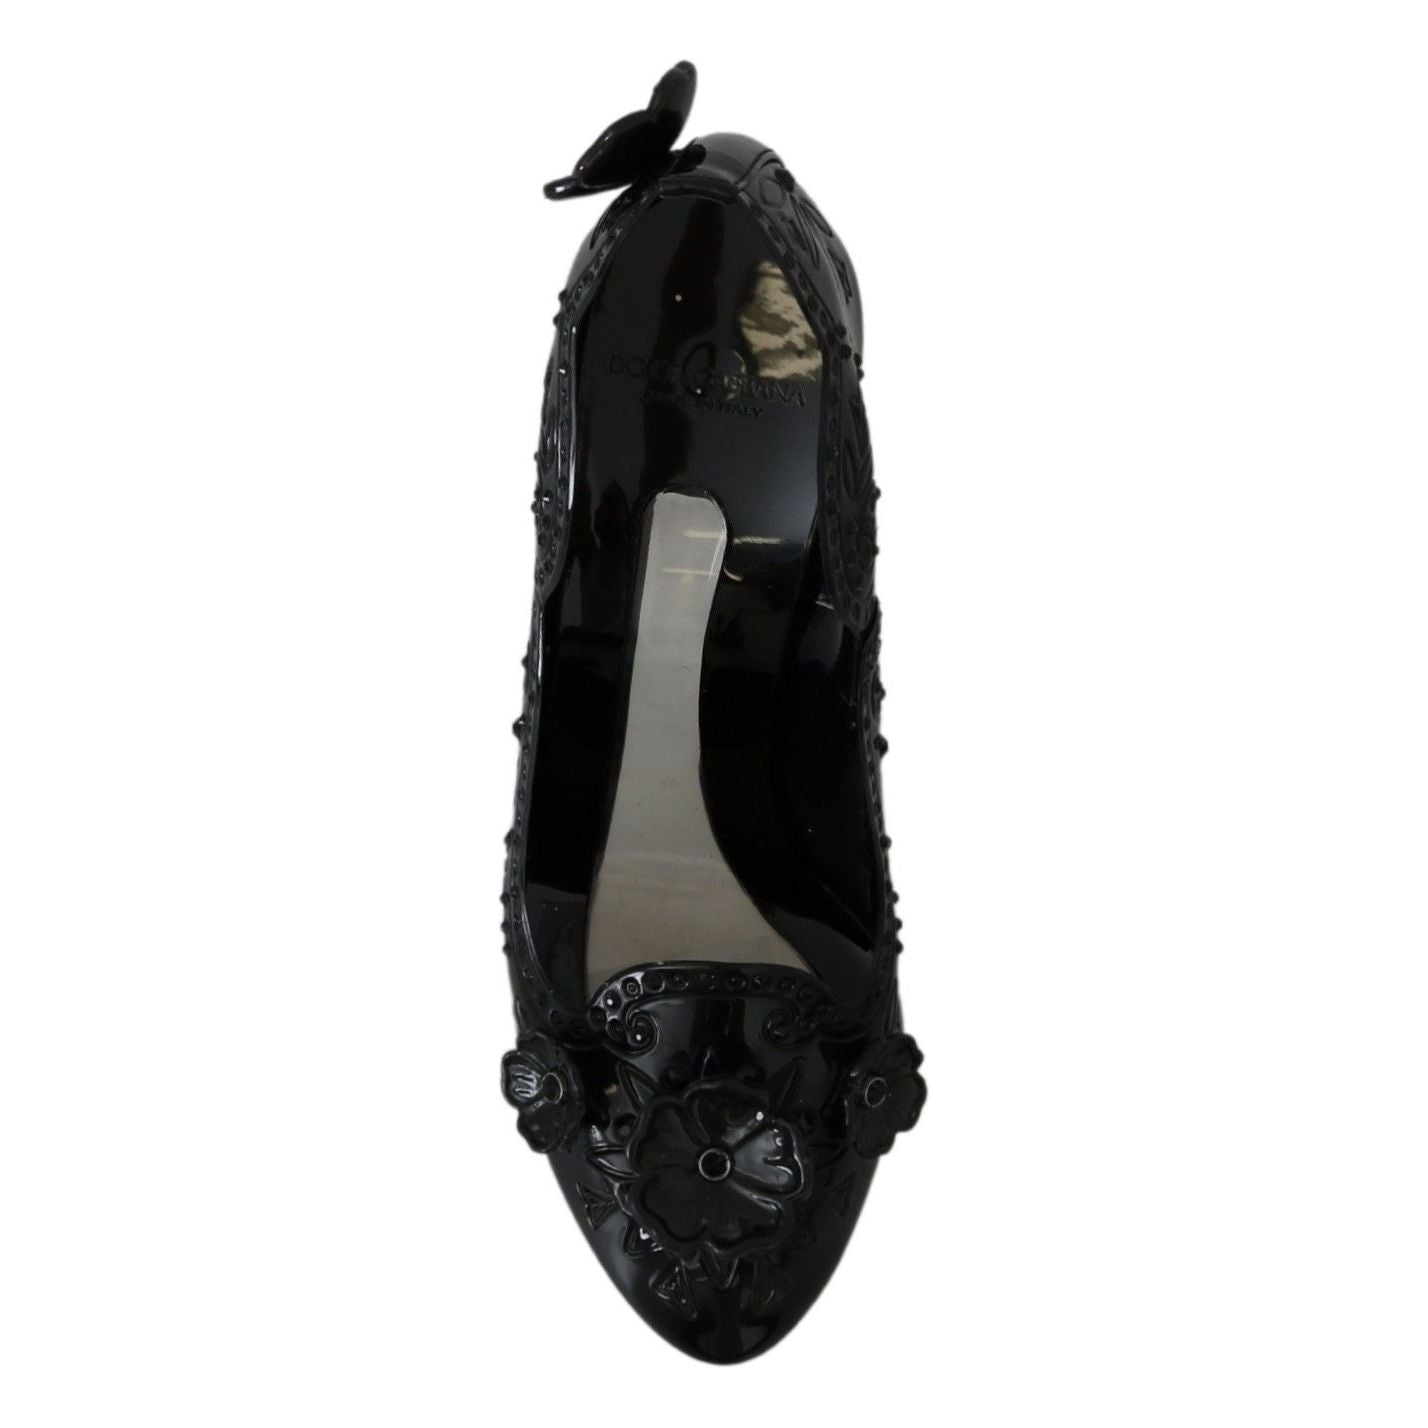 Dolce & Gabbana Enchanting Crystal Cinderella Pumps black-floral-crystal-cinderella-heels-shoes-2